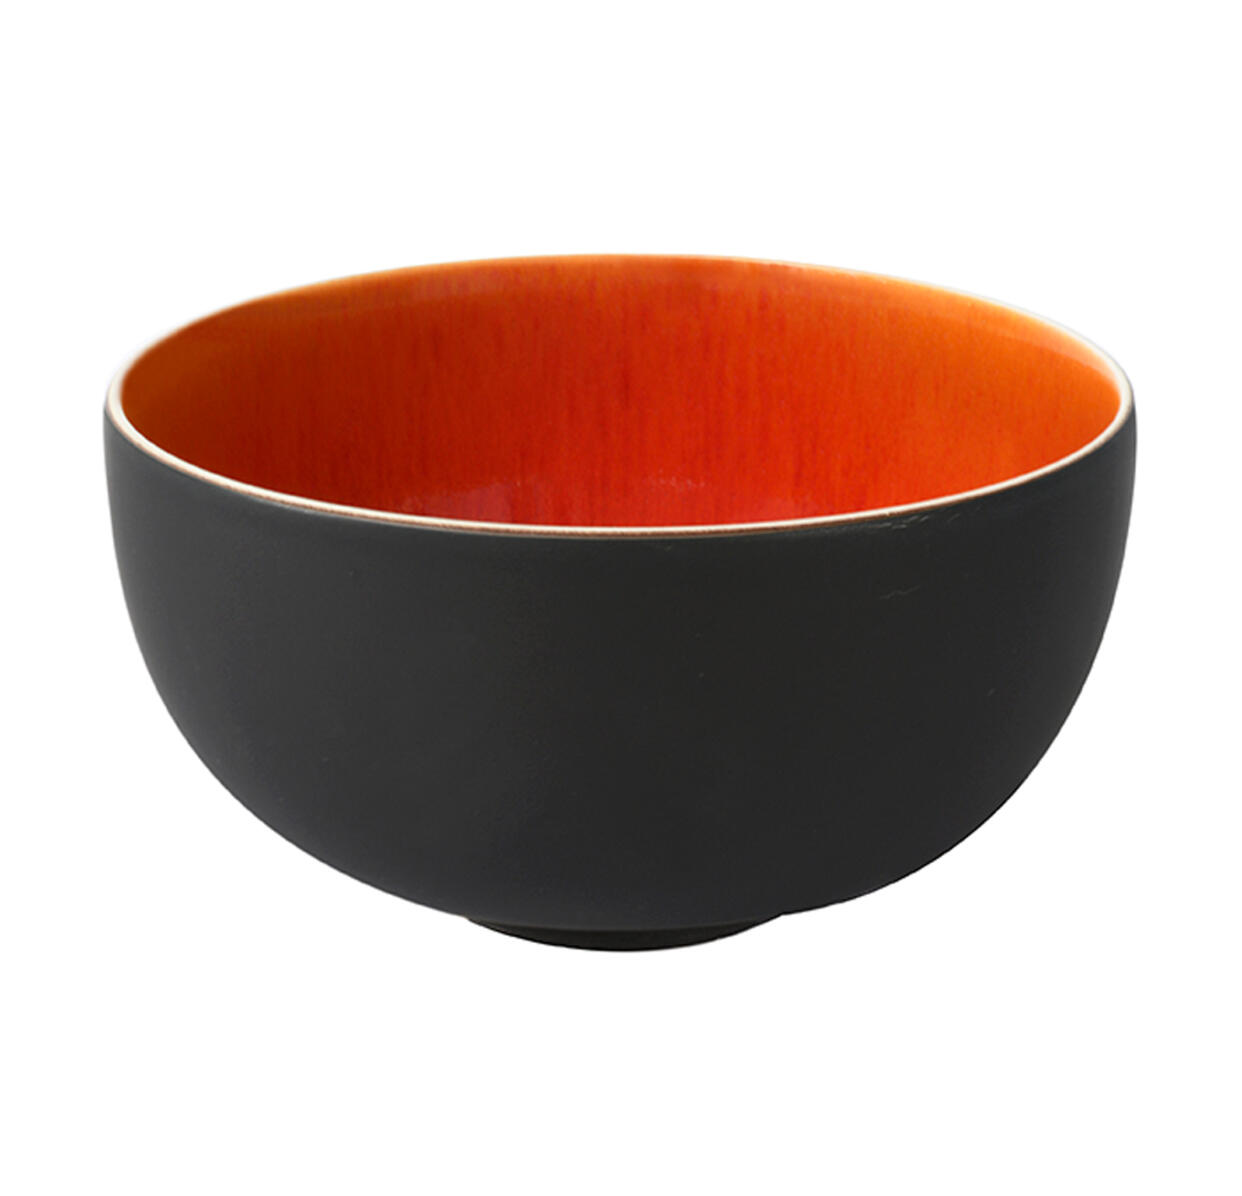 serving bowl m tourron orange ceramic manufacturer